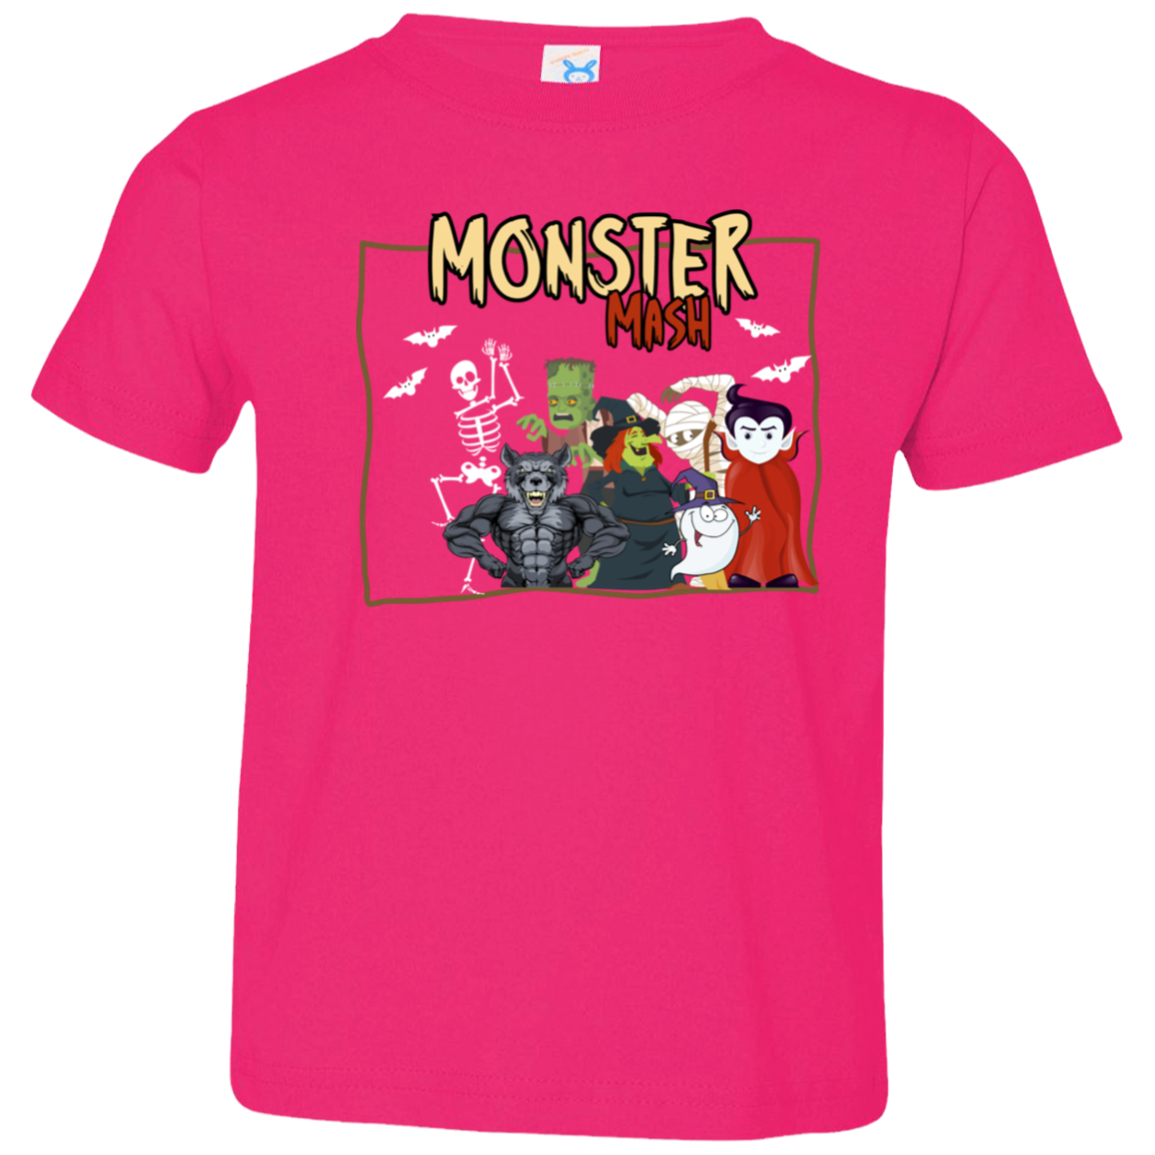 Monster Mash - Unisex Toddler Jersey T-Shirt